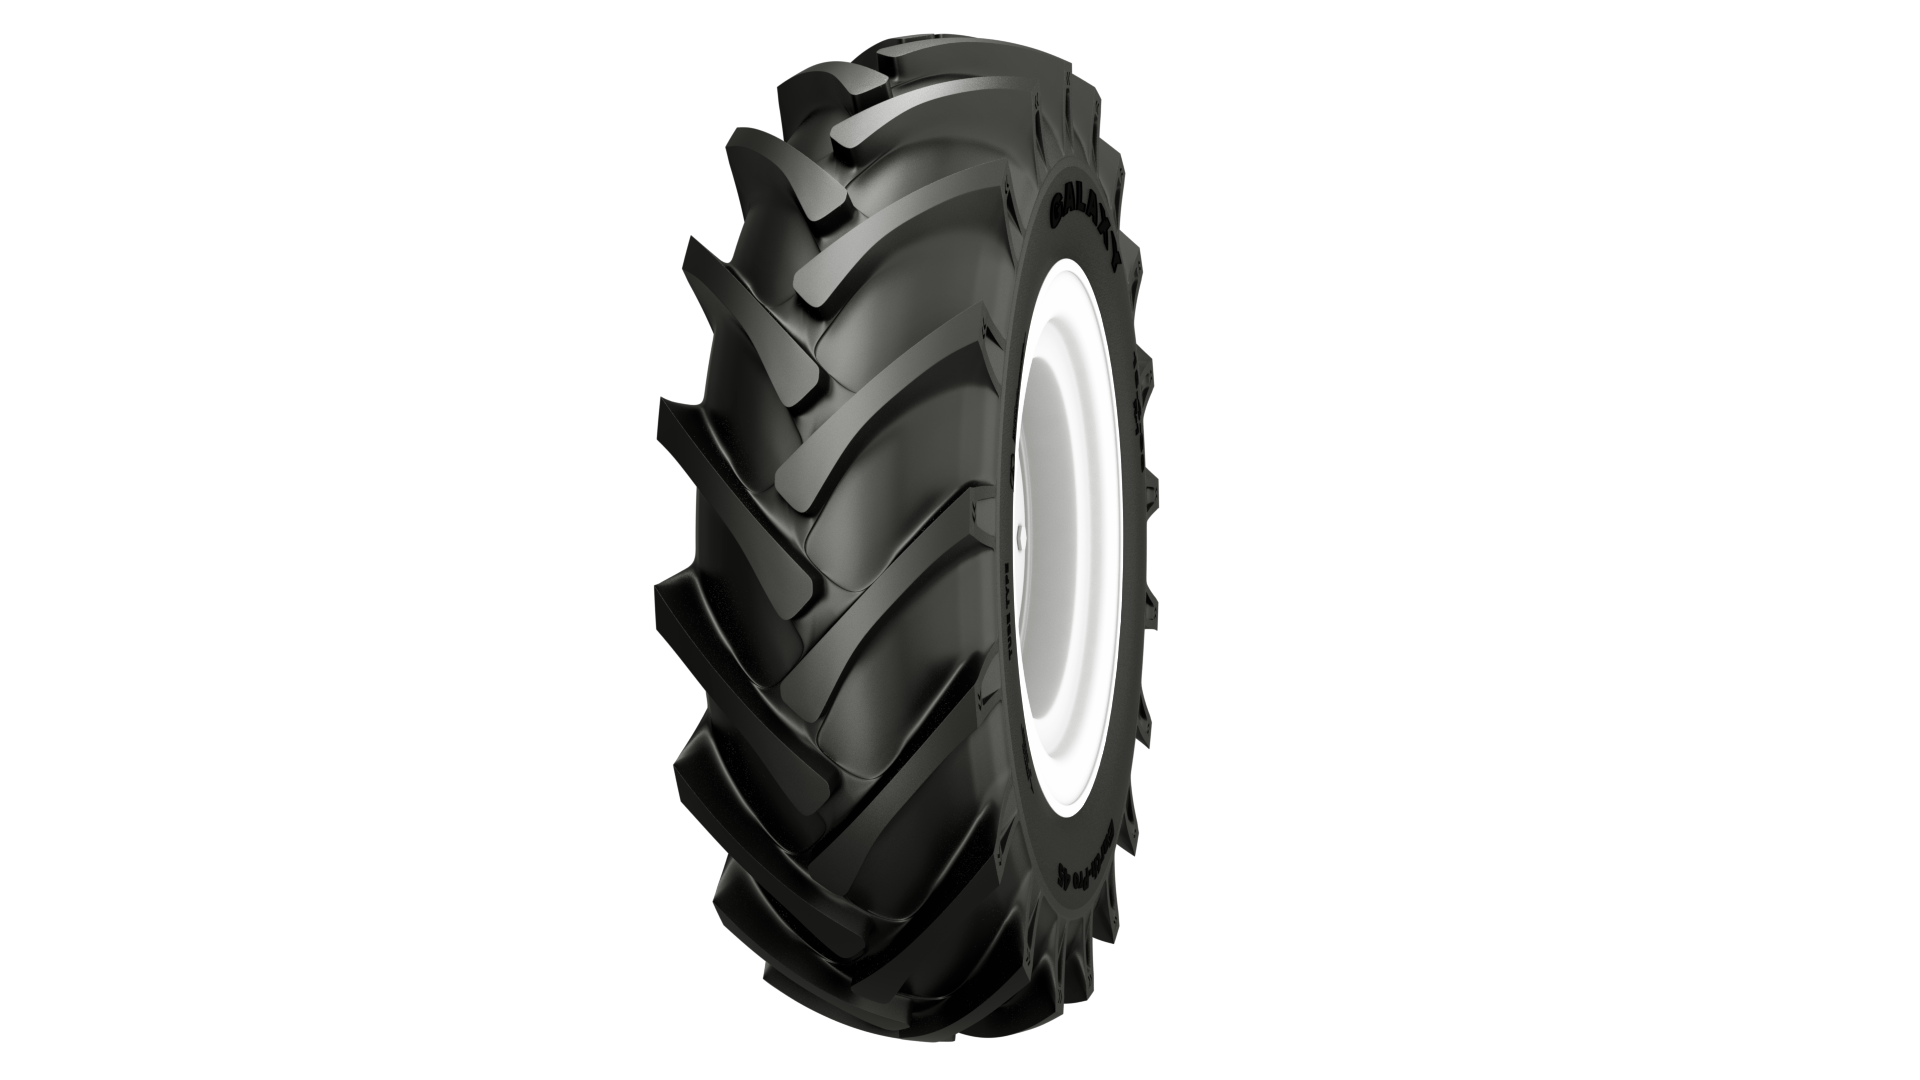 Galaxy earthpro 45 tire